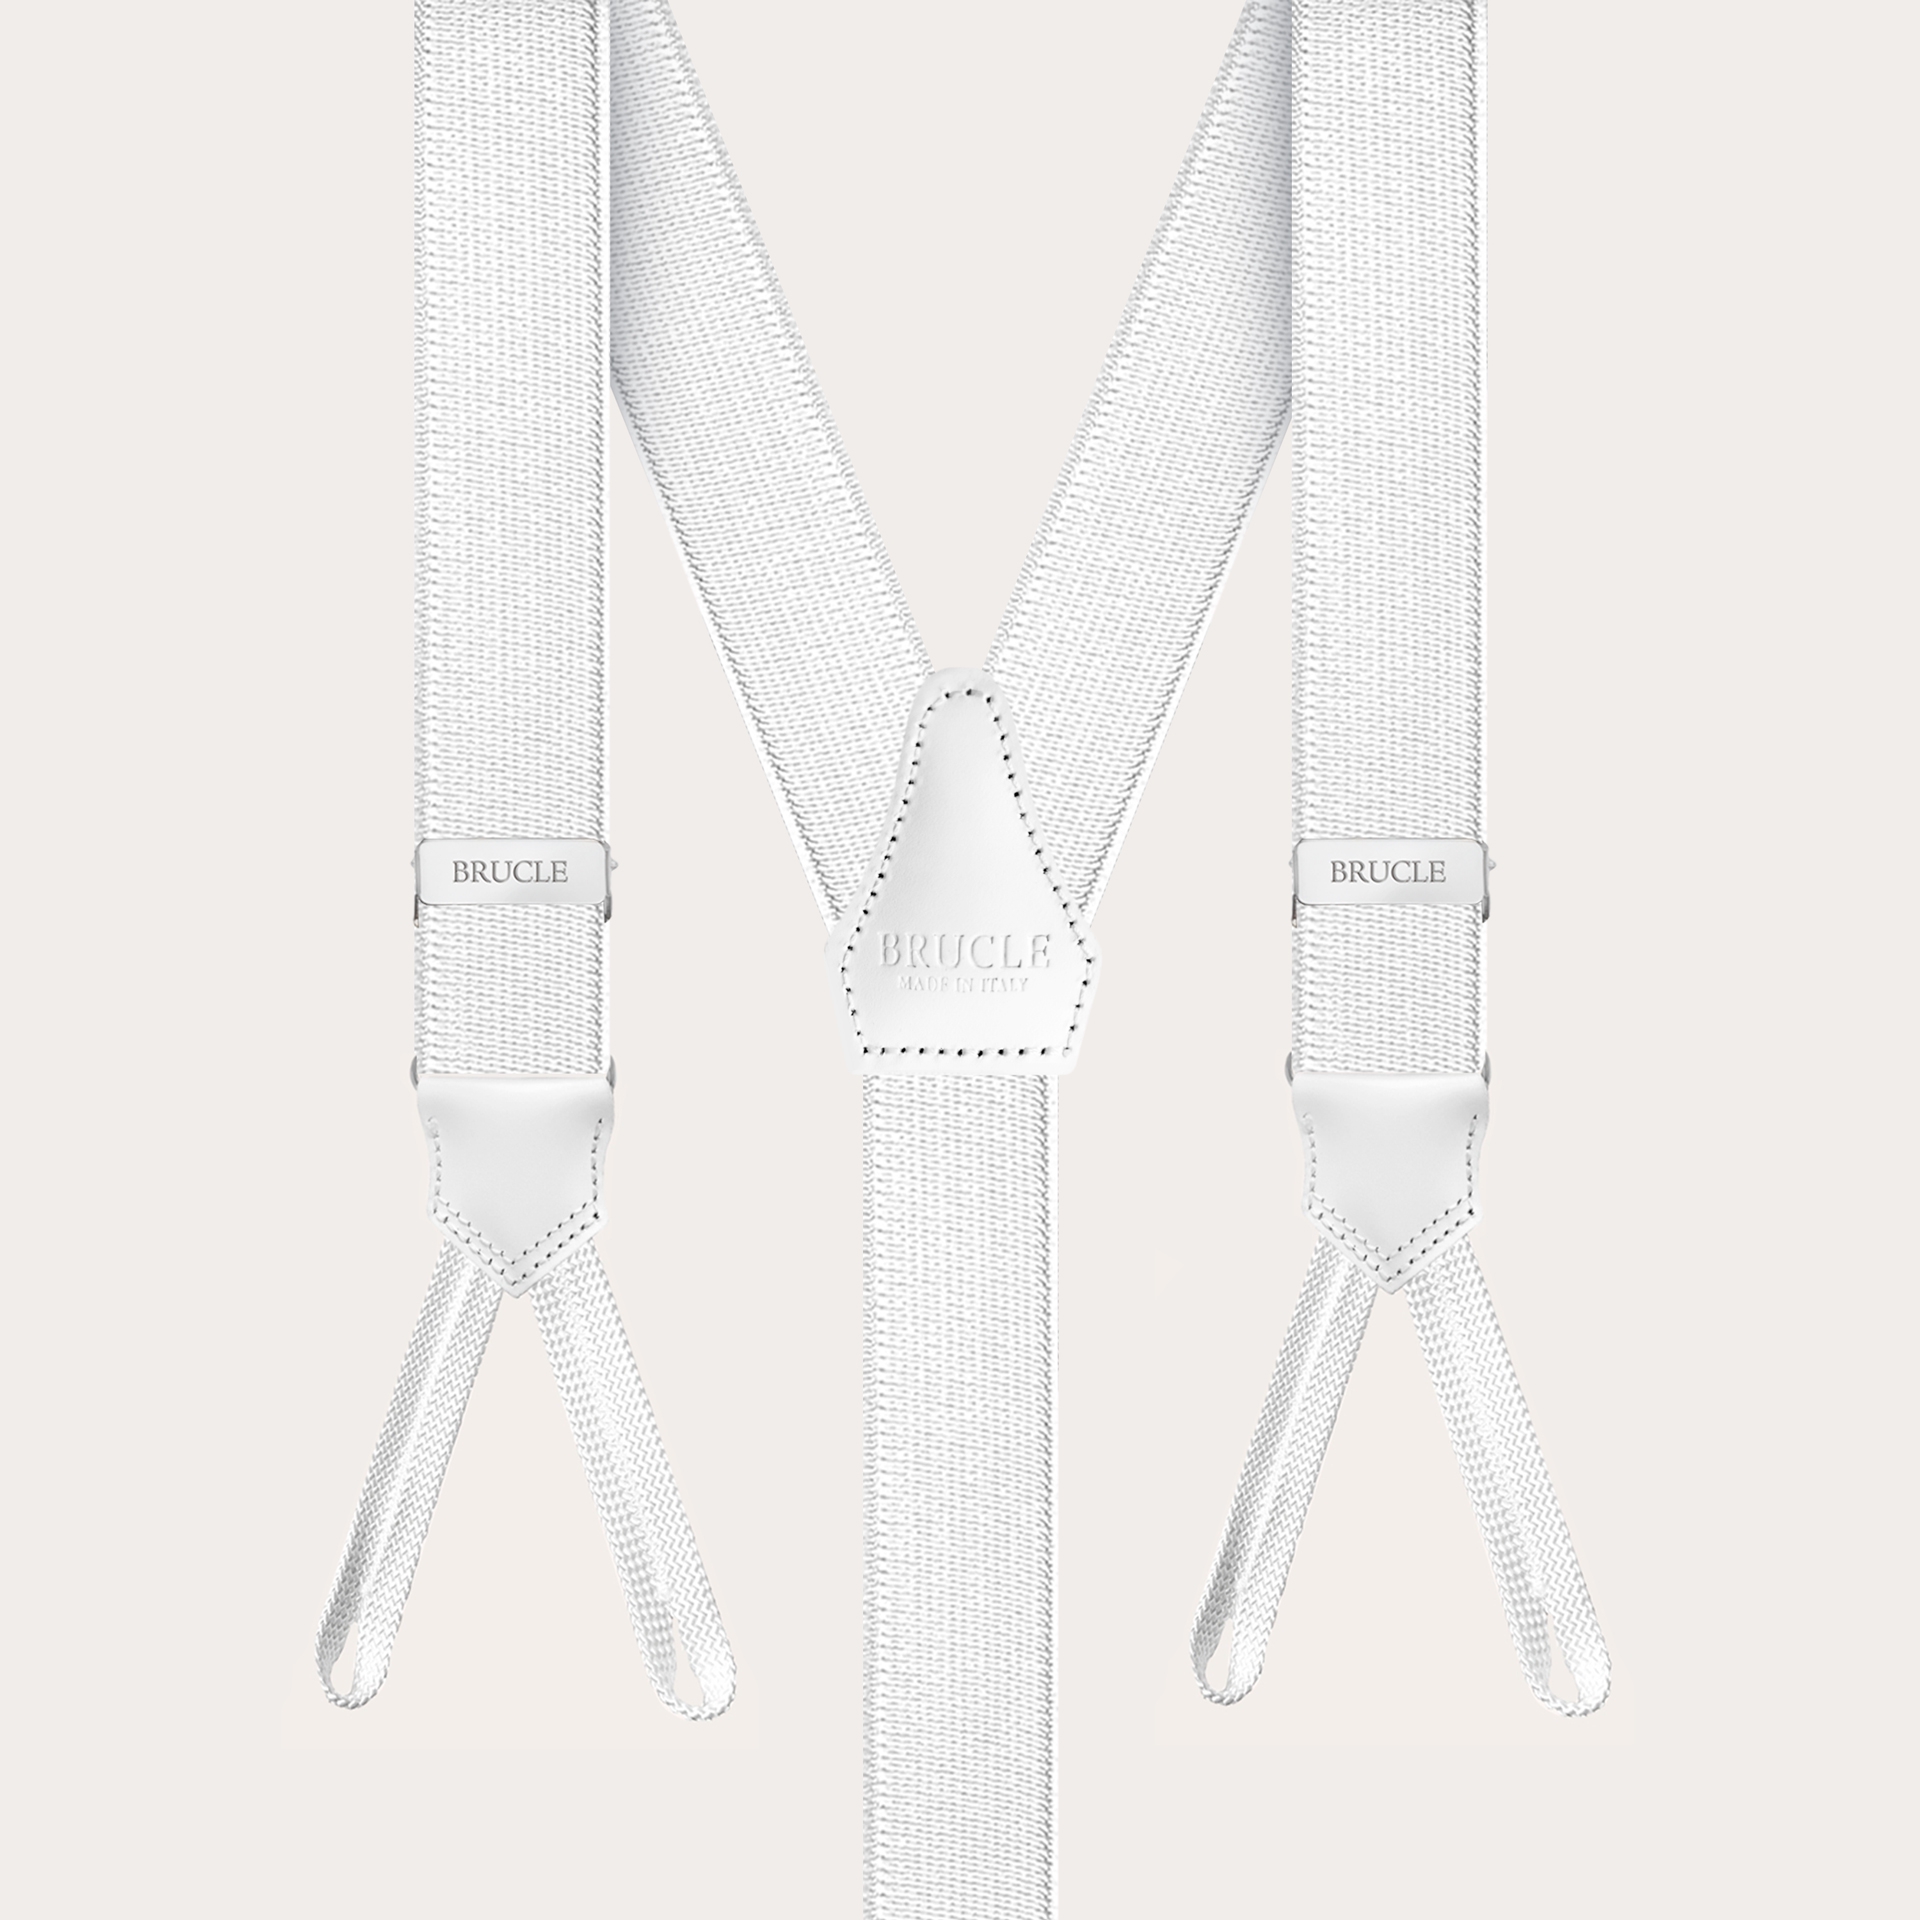 BRUCLE Formal Y-shape suspenders with braid runners, white